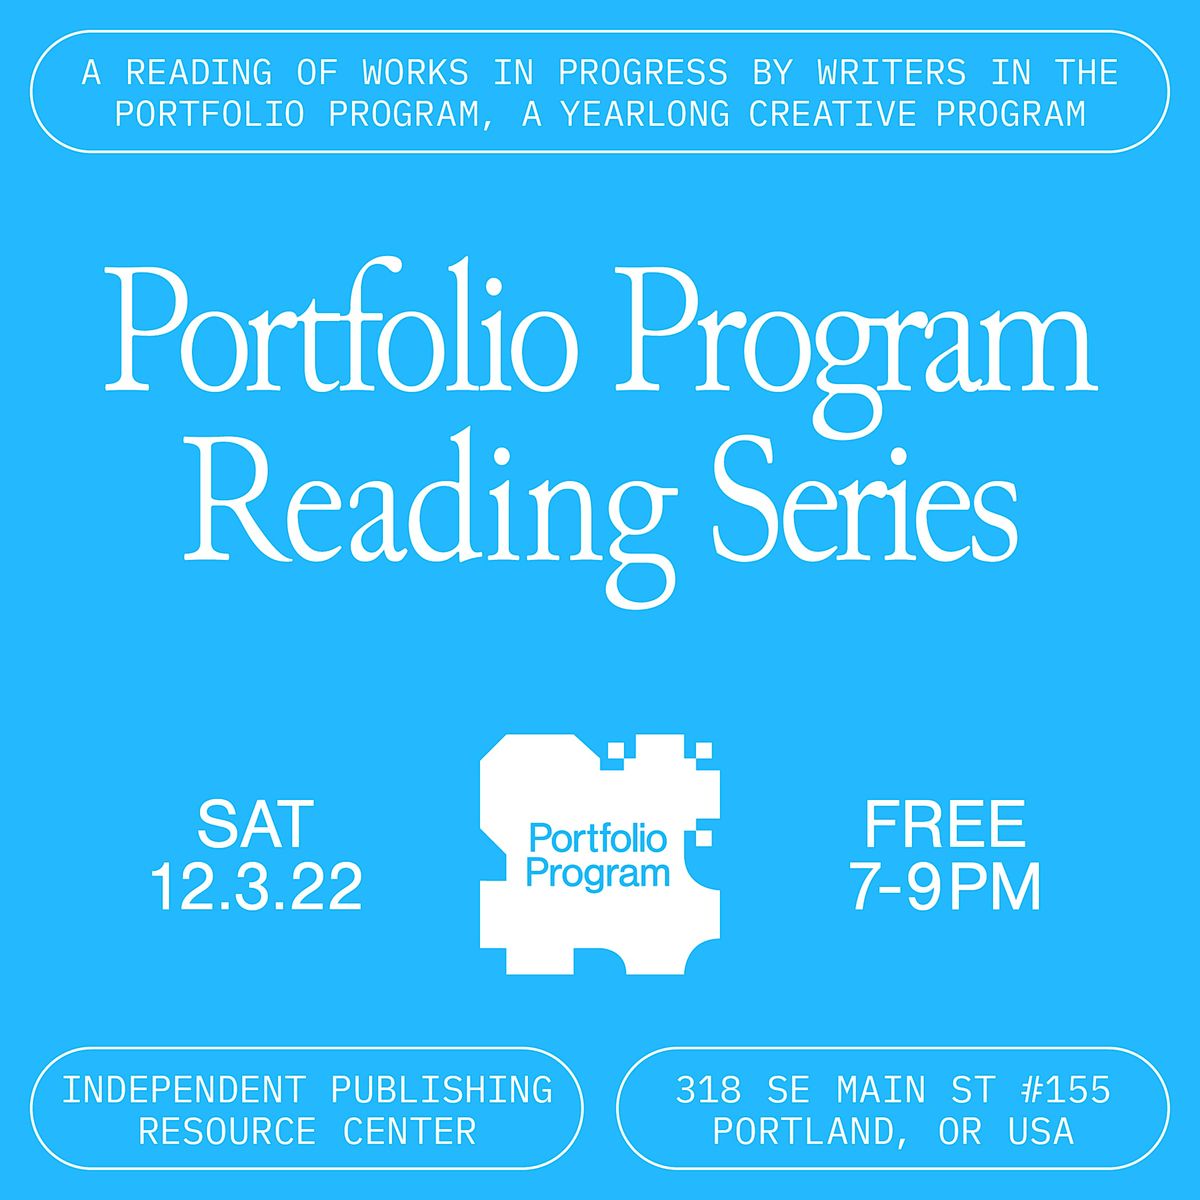 Portfolio Program Reading Series